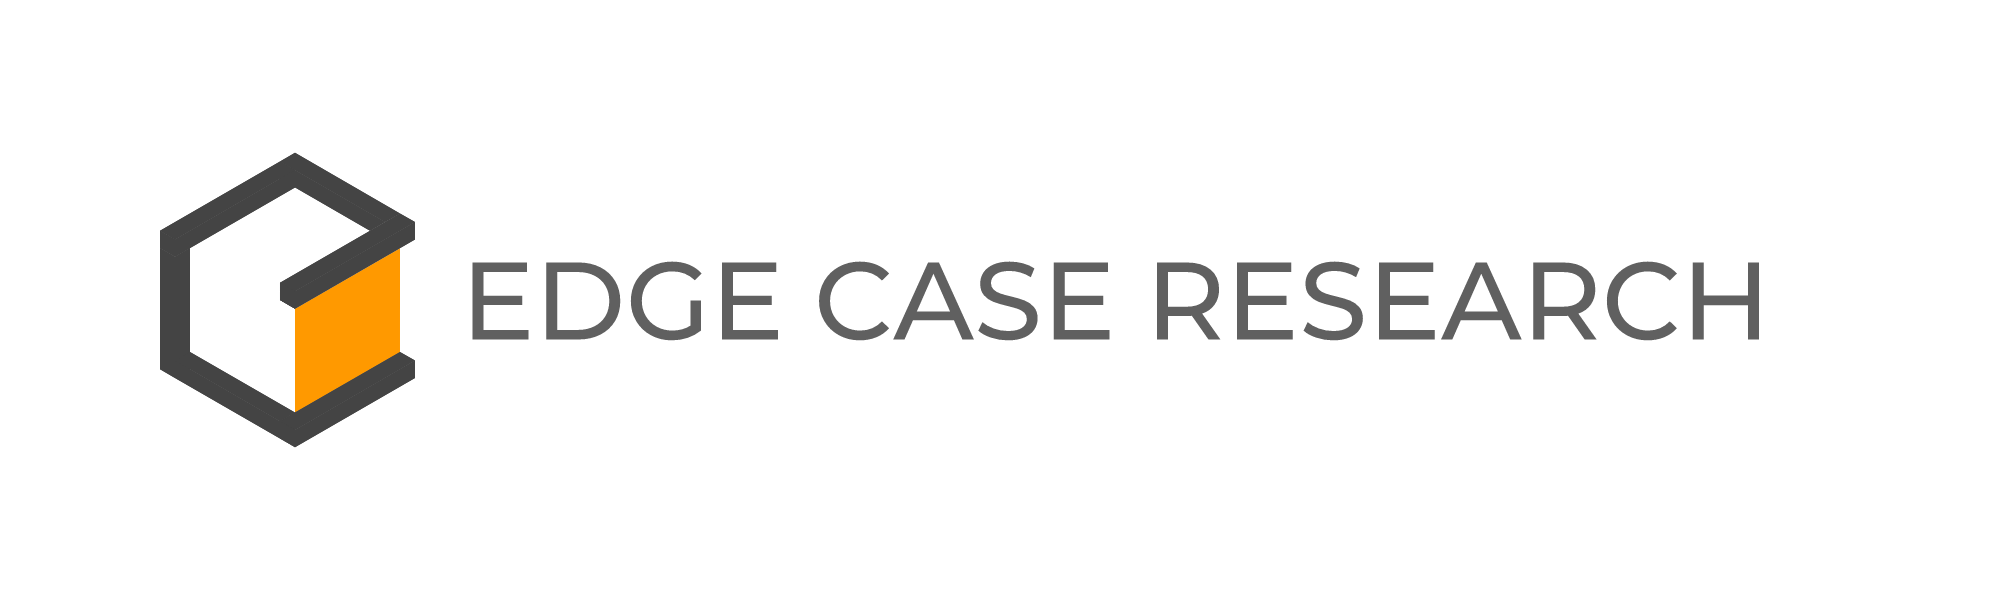 Edge Case Research Logo